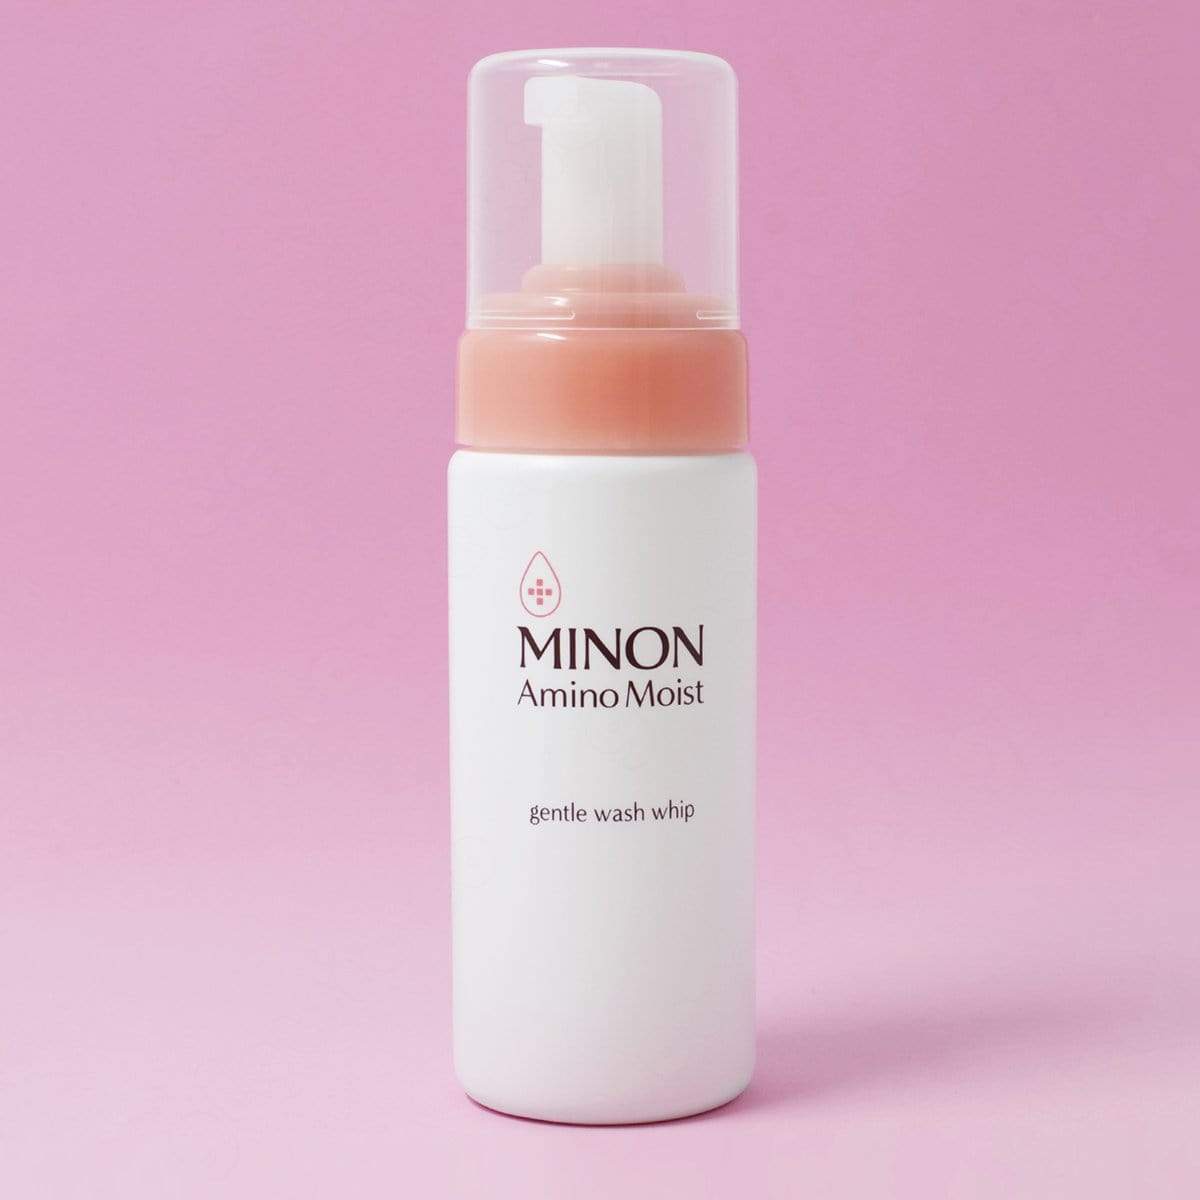 MINON Amino Moist Gentle Wash Whip Foaming Cleanser